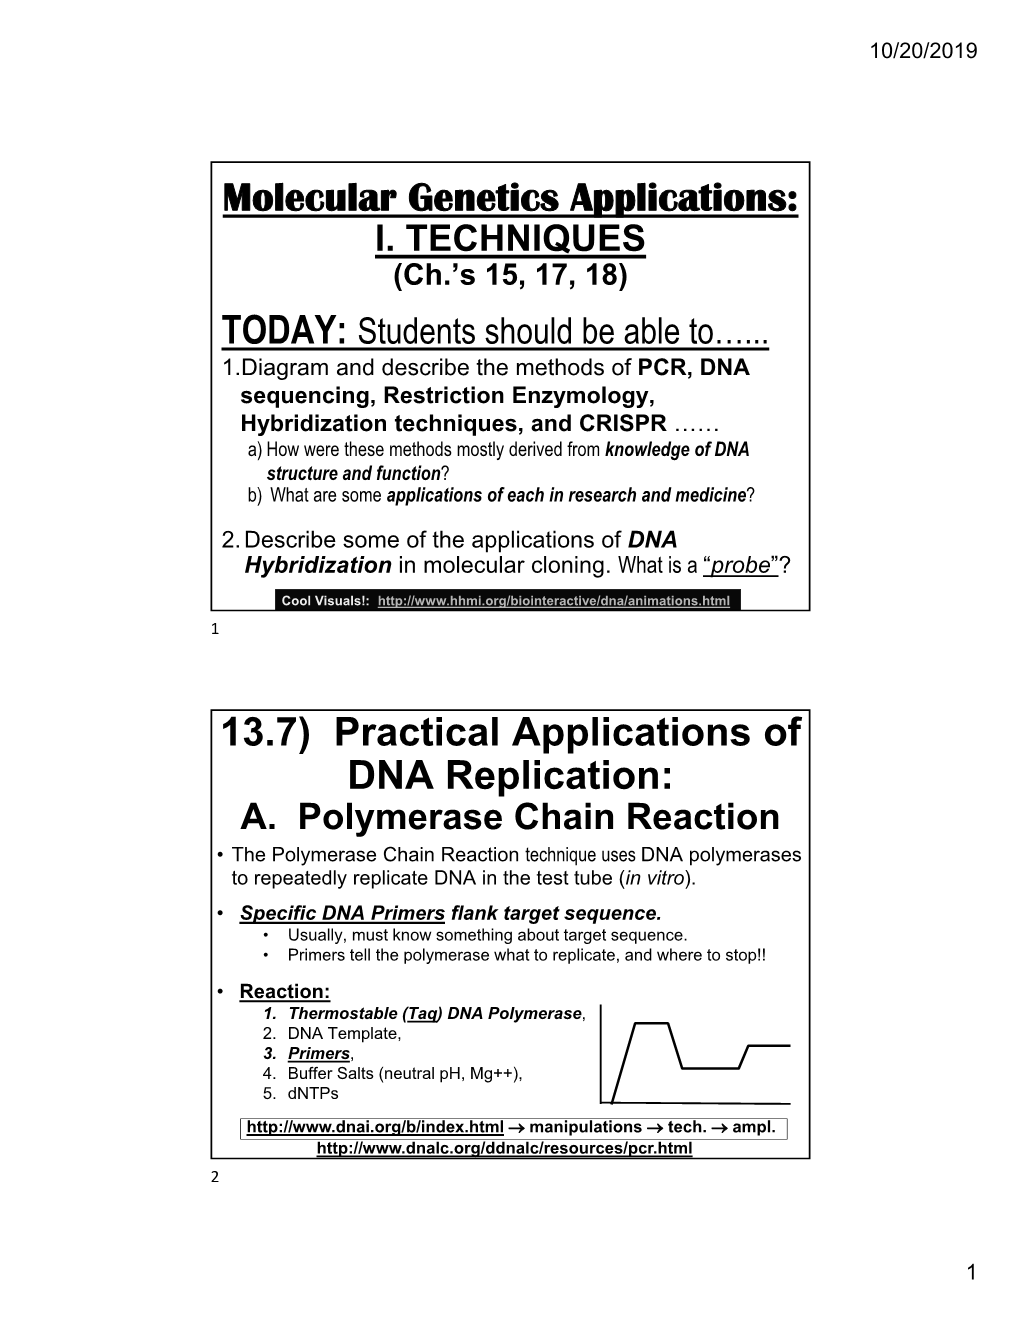 Molecular Genetics Applications: 13.7) Practical Applications of DNA